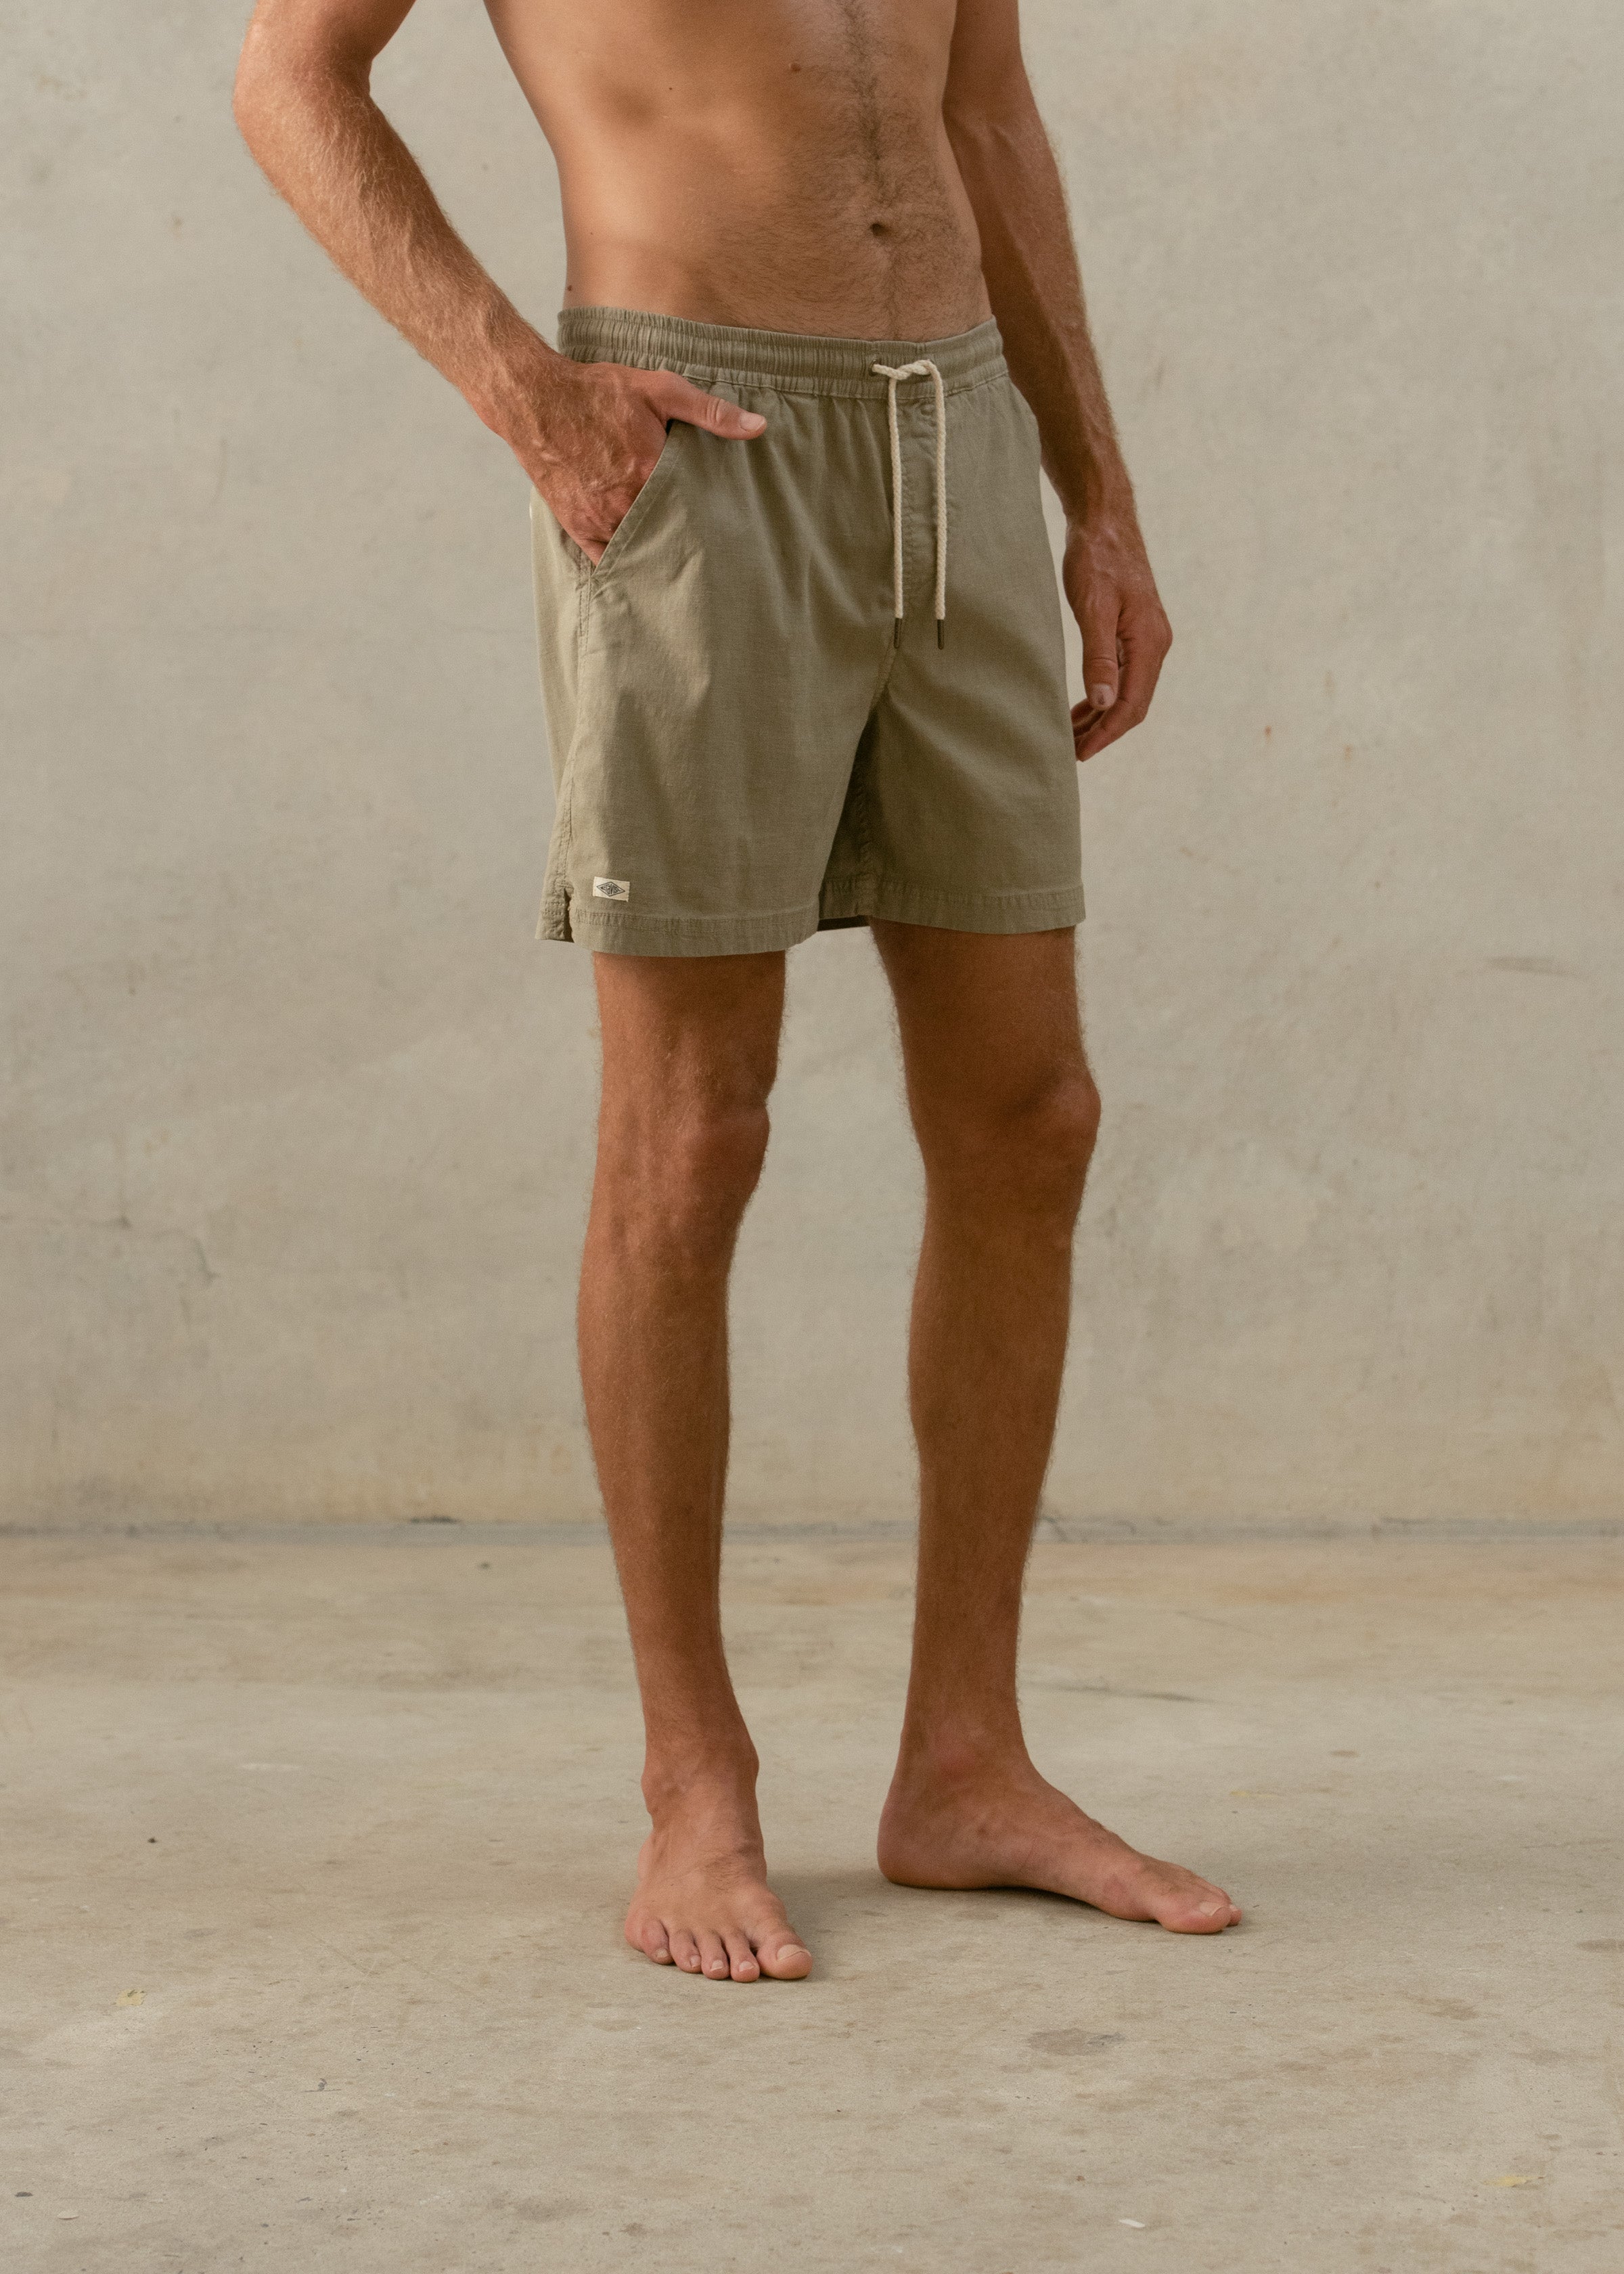 Simply Southern Corduroy Shorts for Men in Khaki Brown